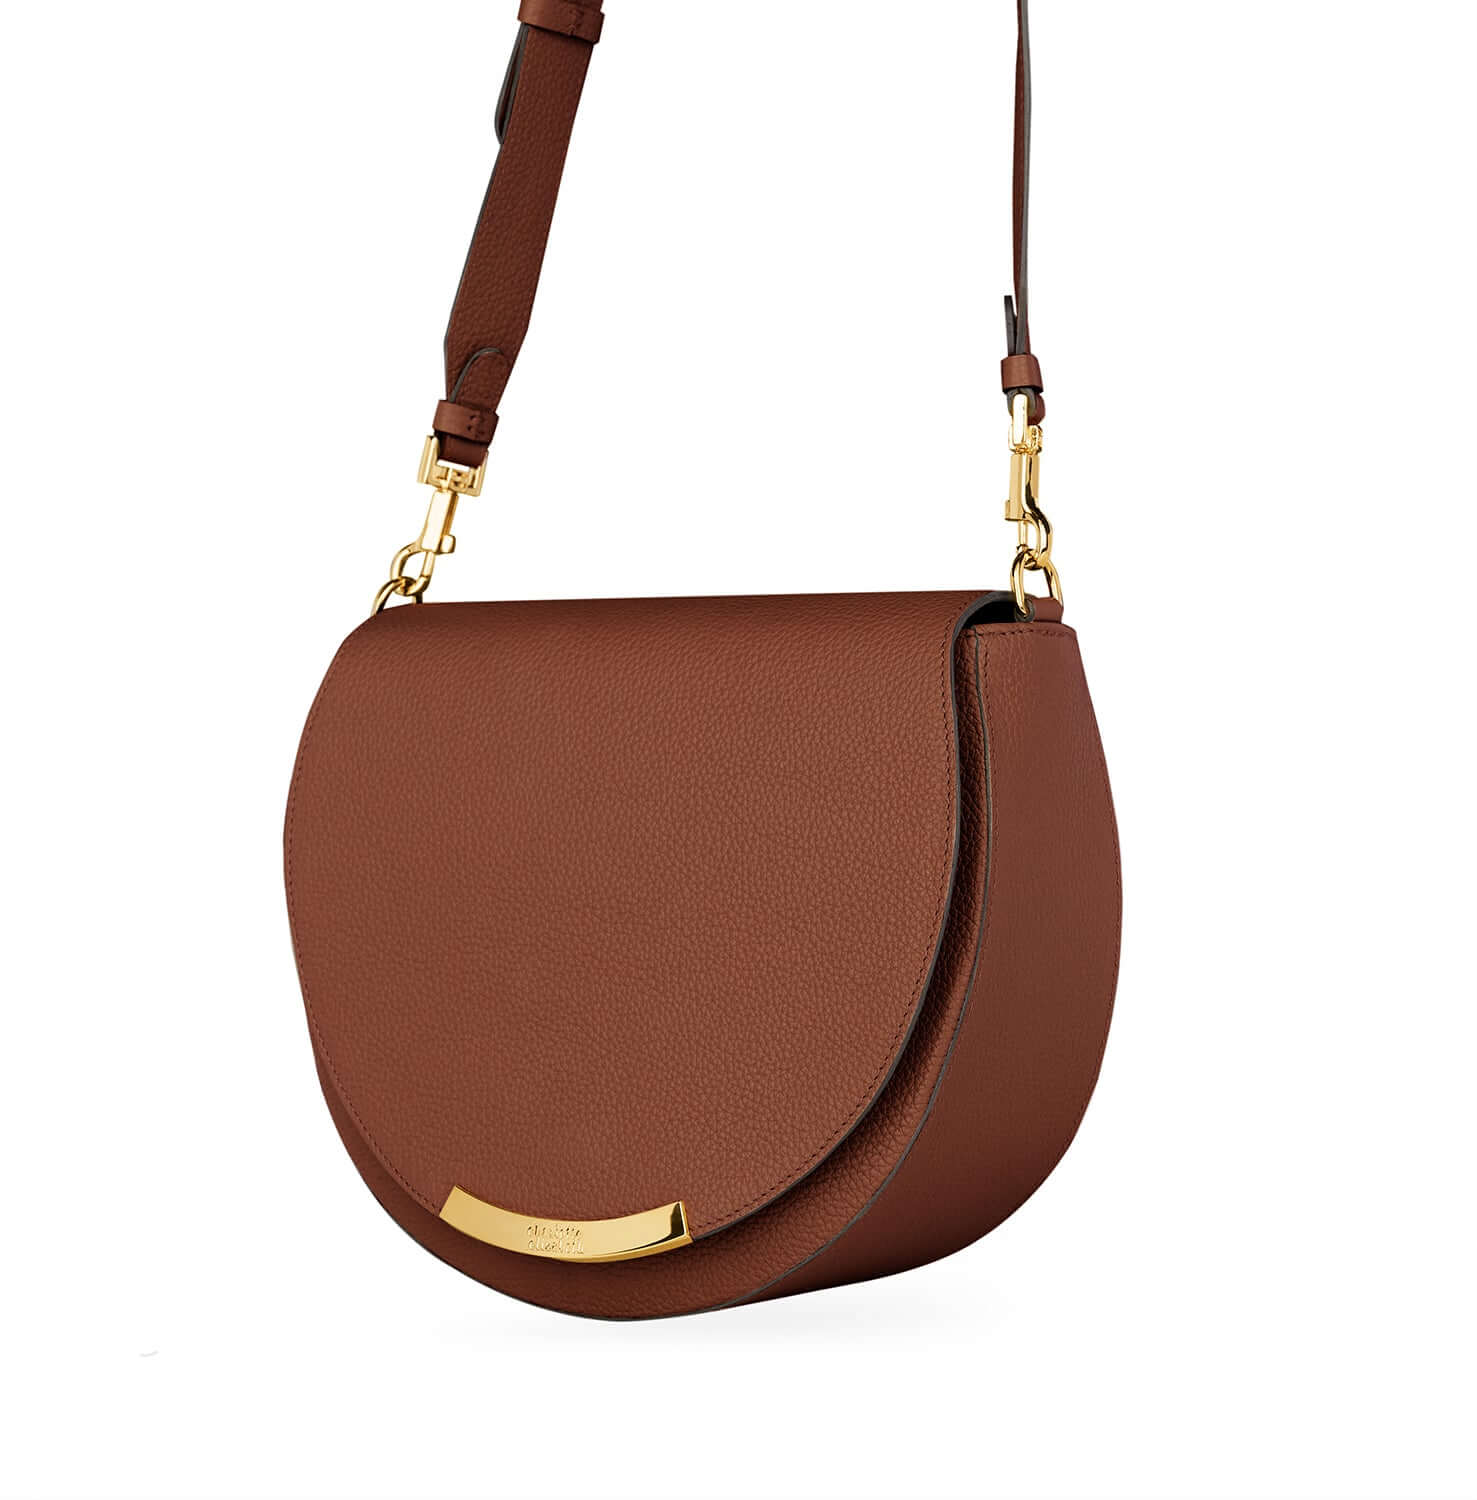 crossbody ladies handbag made in UK brown tan leather